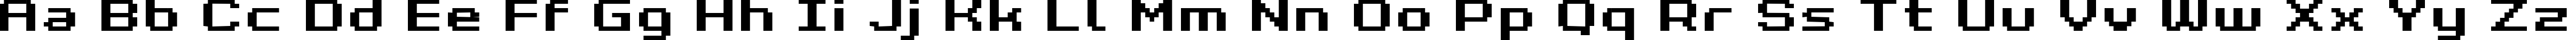 Пример написания английского алфавита шрифтом Grixel Kyrou 7 Wide Bold Xtnd